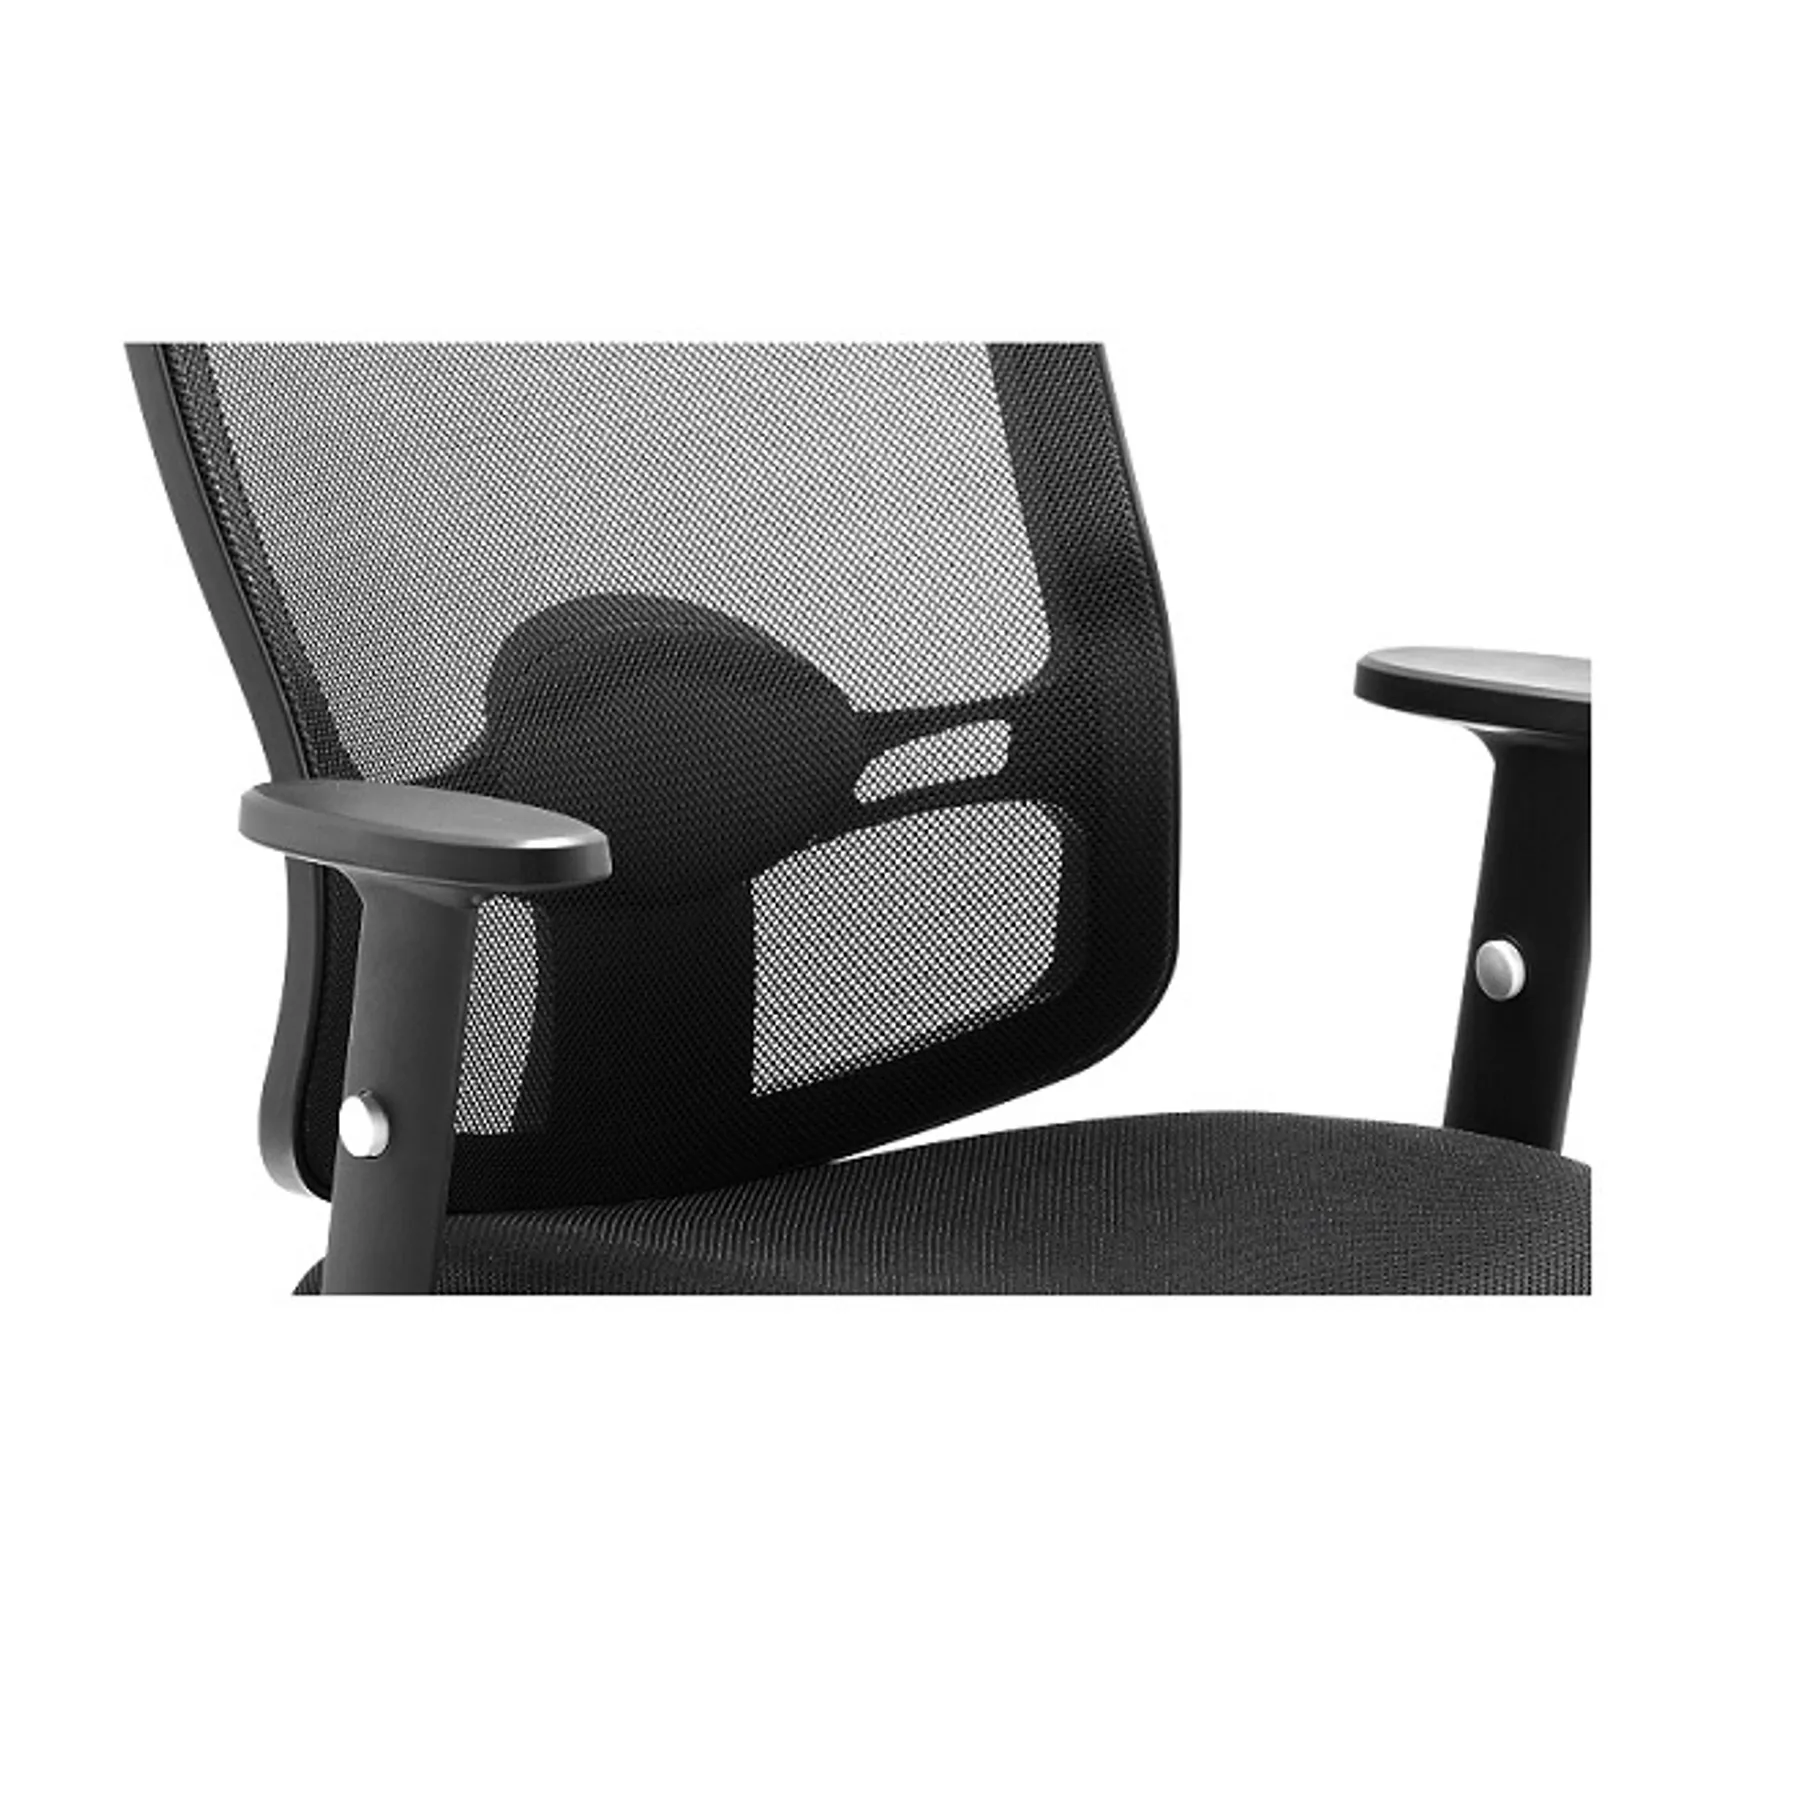 Lof Direct Dynamic portland mesh cantilever chair black EX000136 meeting chair back detail